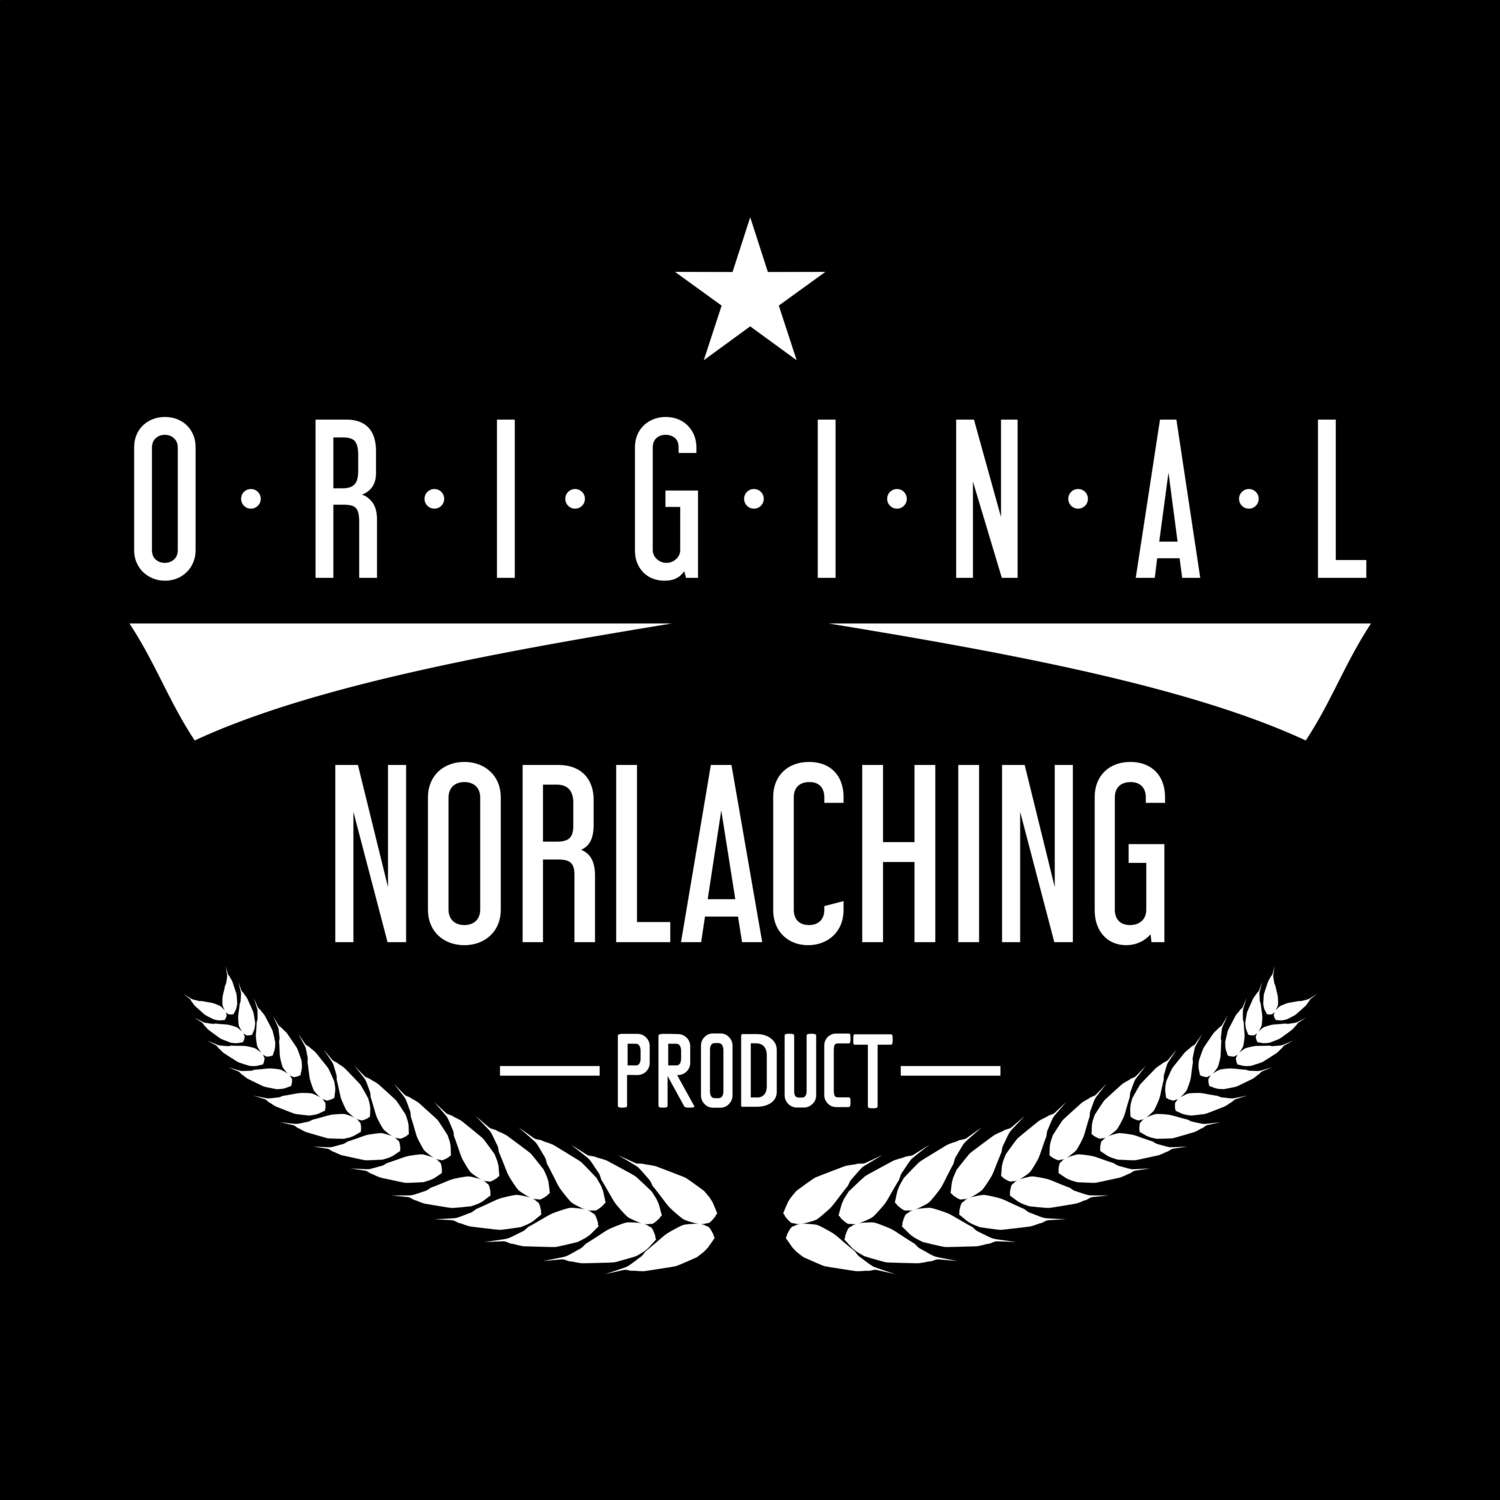 Norlaching T-Shirt »Original Product«